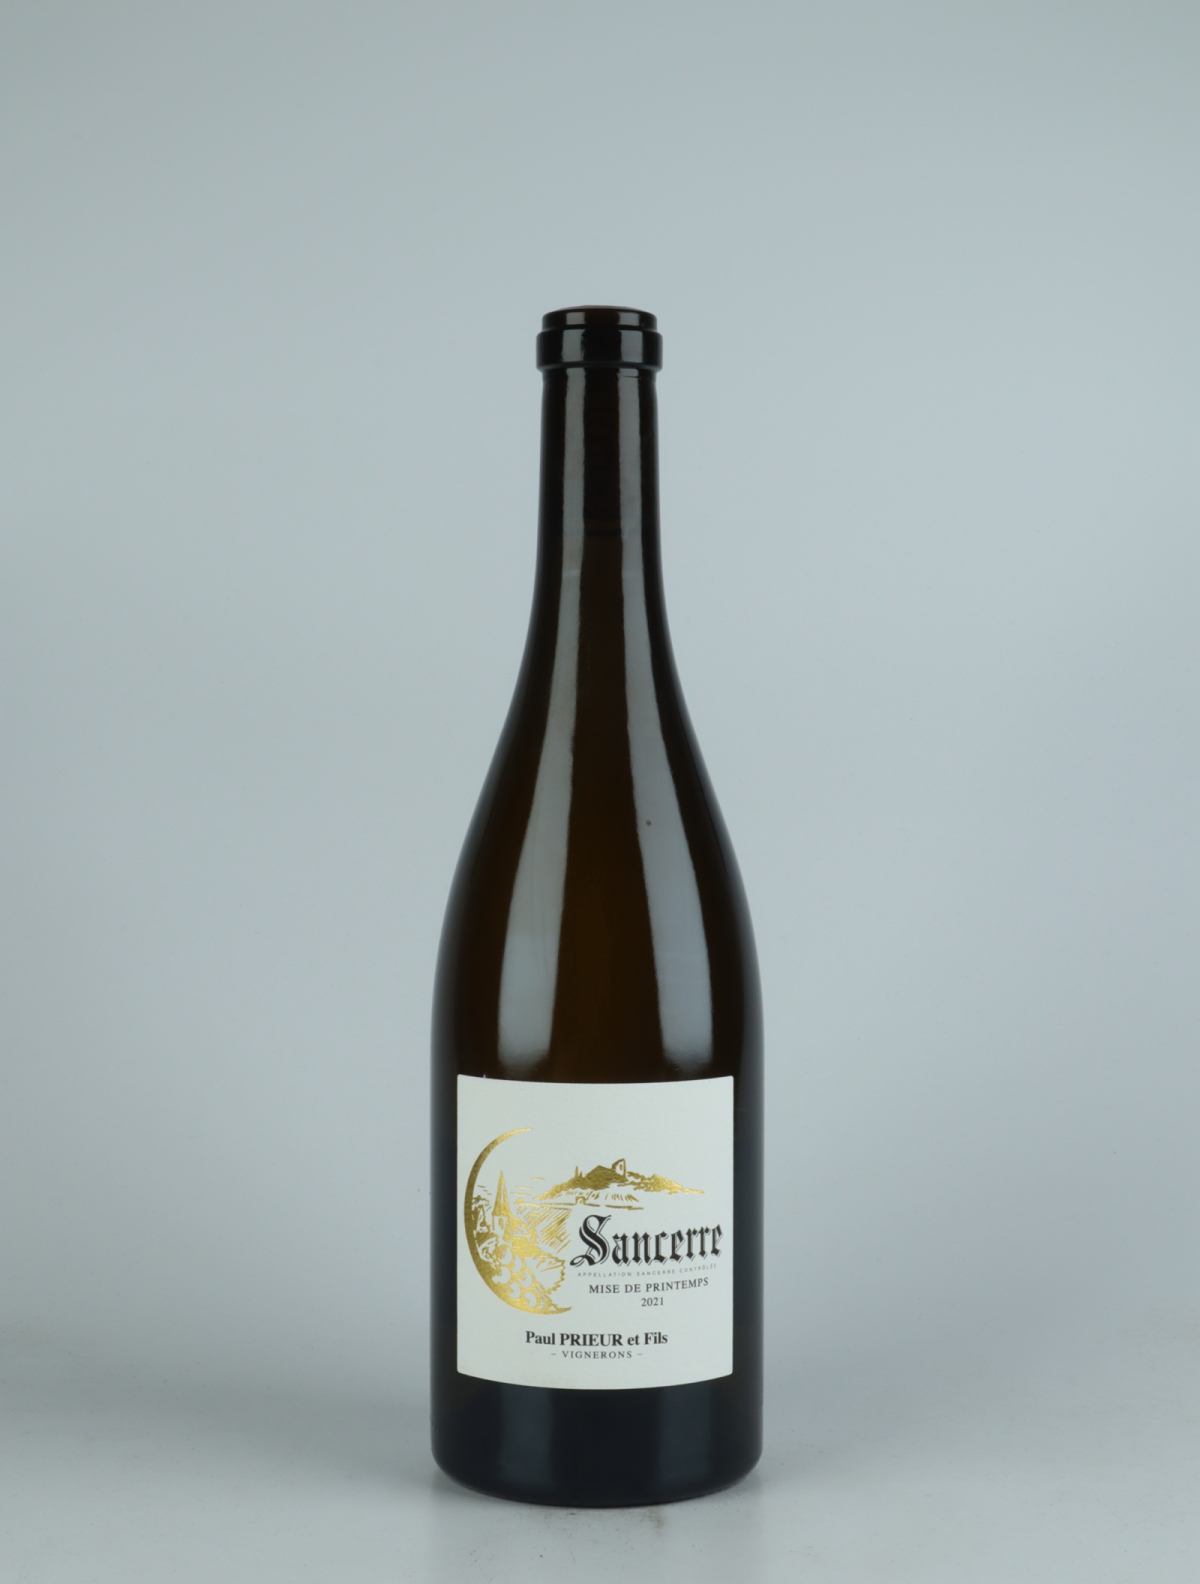 A bottle 2021 Sancerre White wine from Paul Prieur et Fils, Loire in France